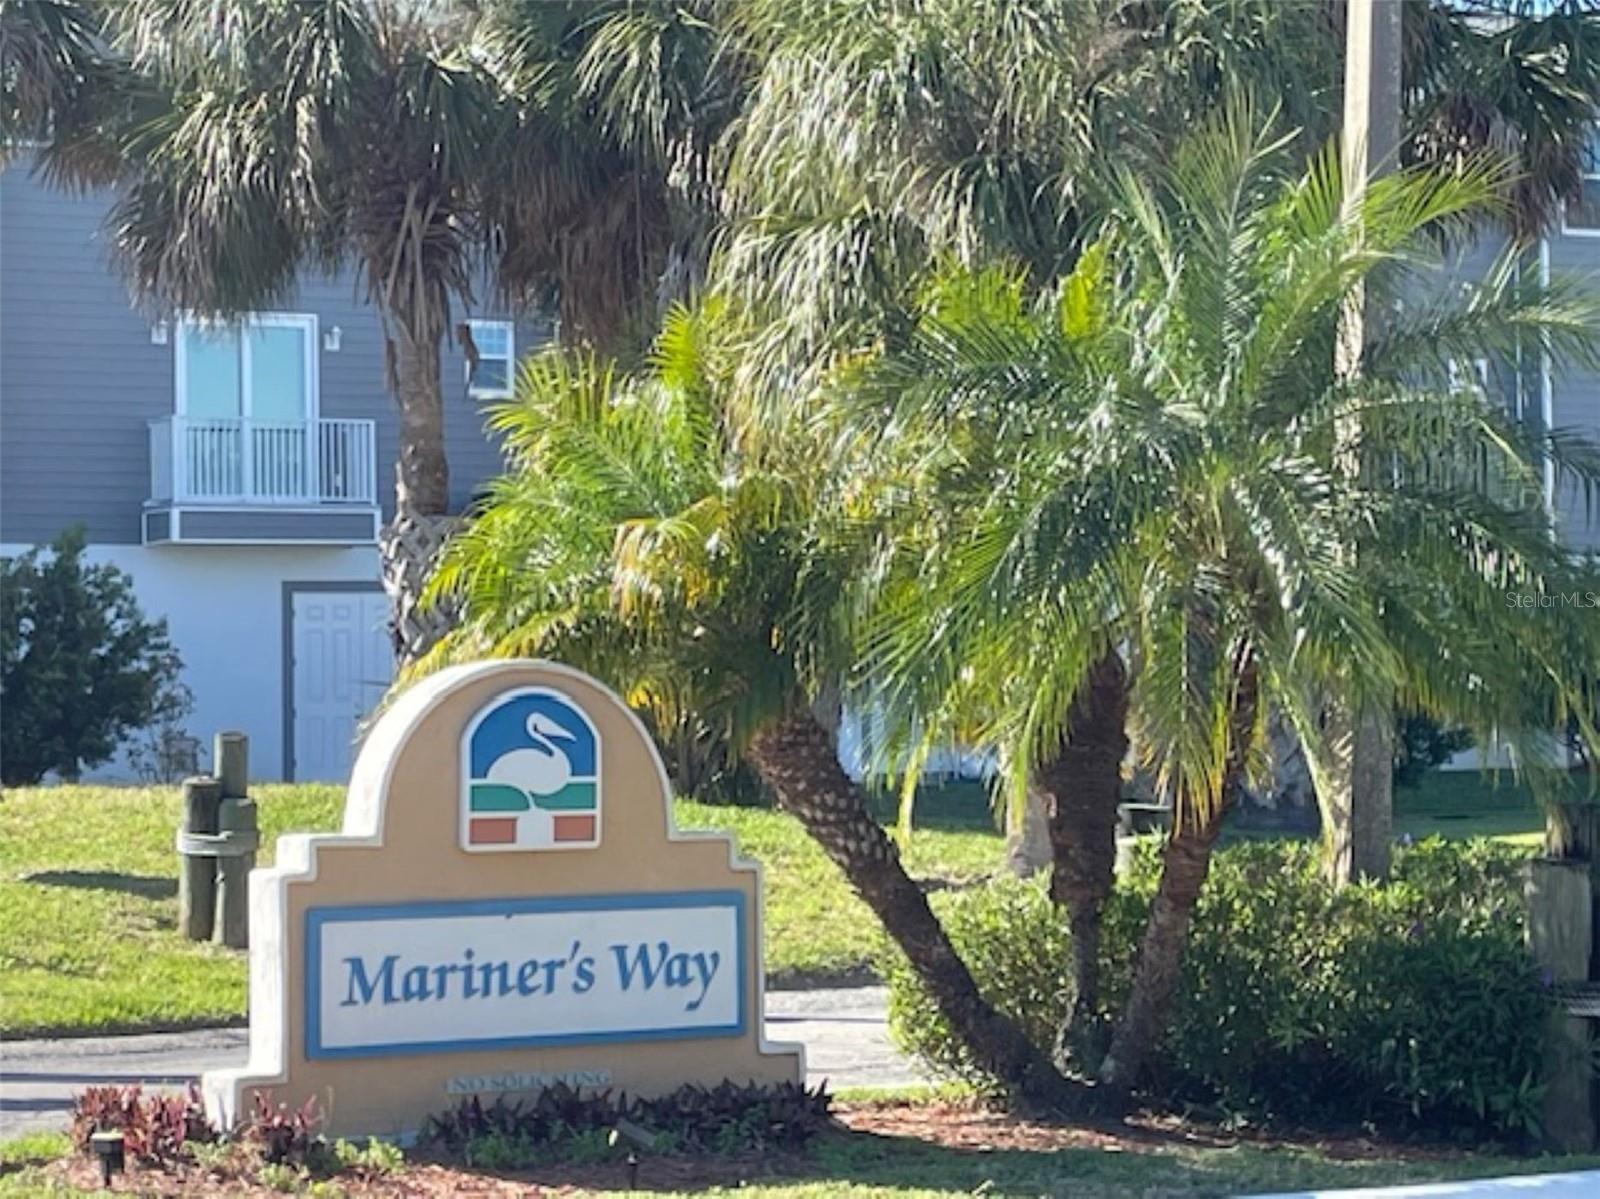 Mariner's Way Entrance